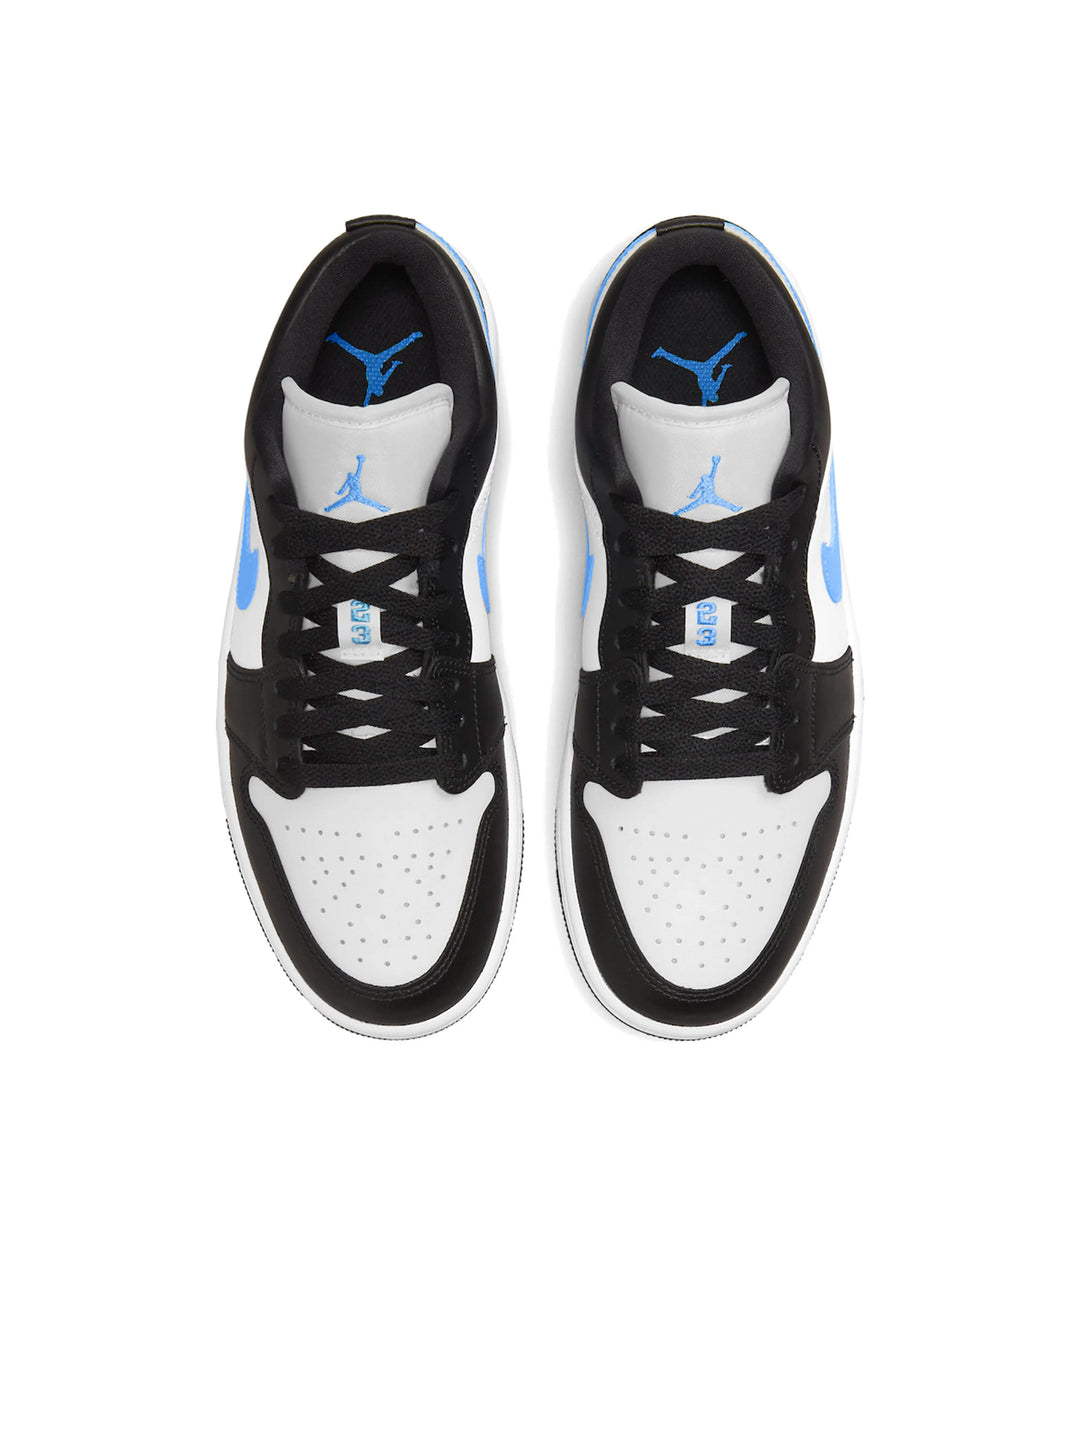 Nike Air Jordan 1 Low Black University Blue [W] Prior